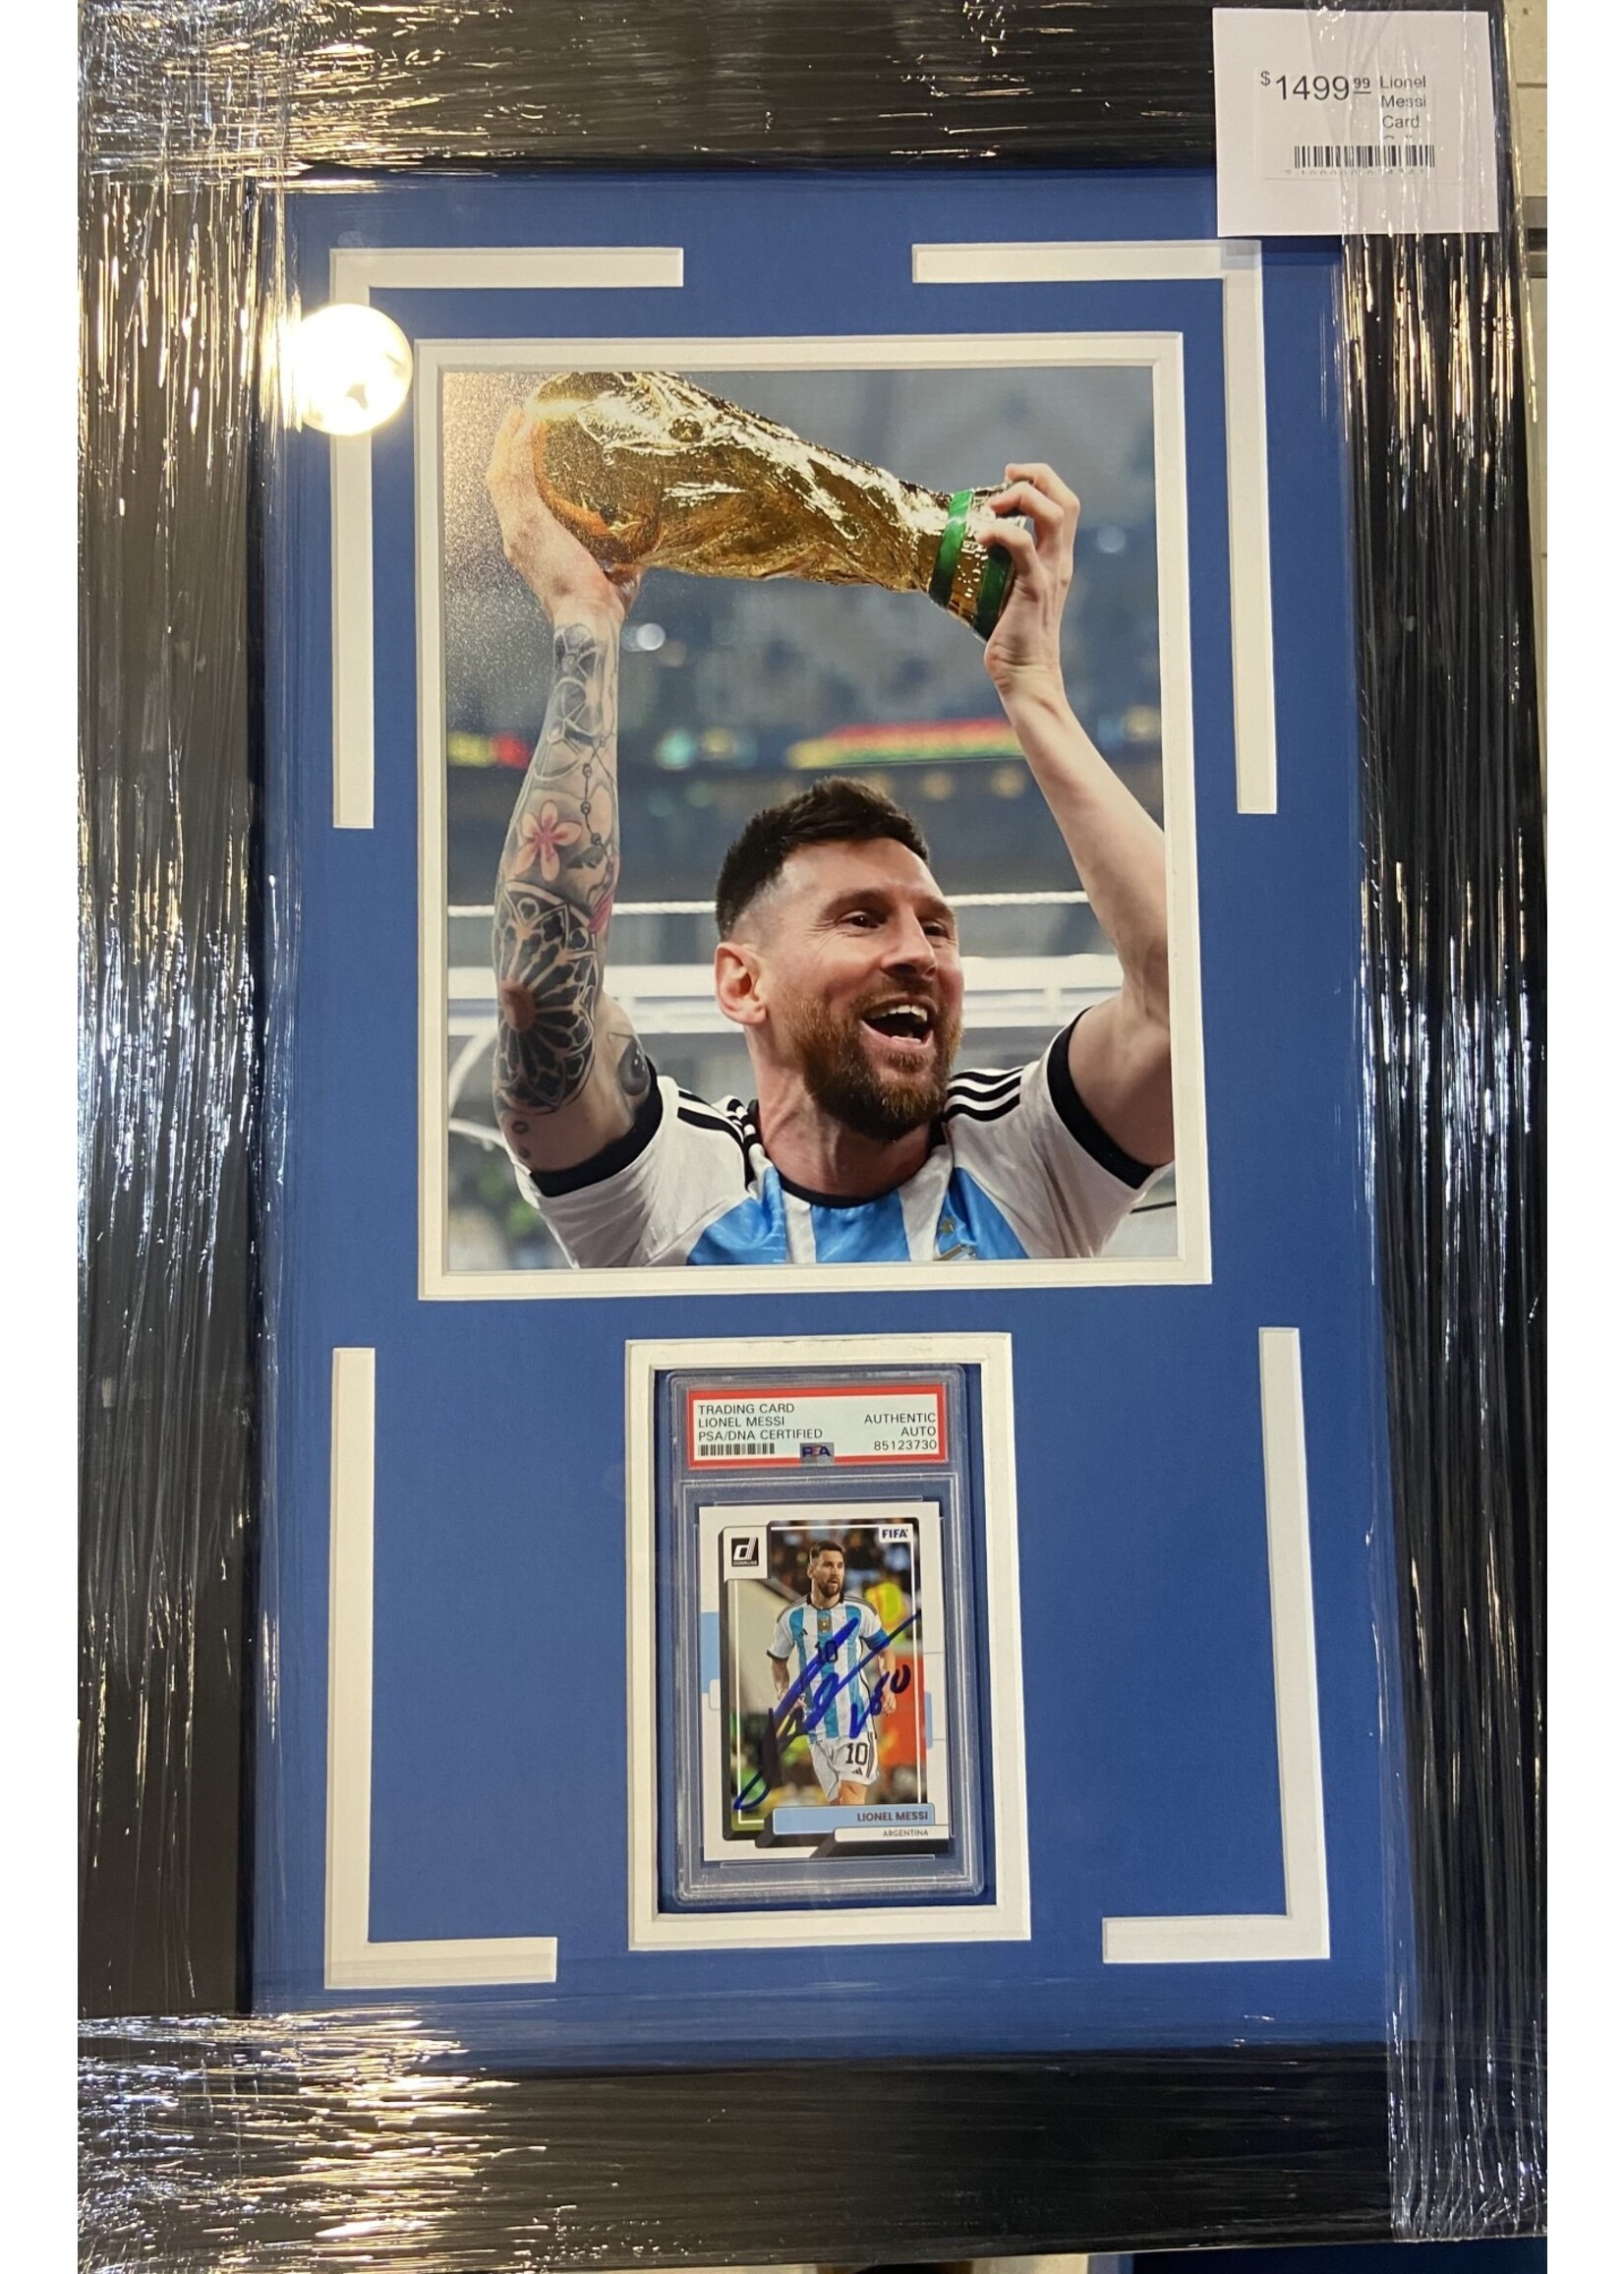 Lionel Messi Card Collage